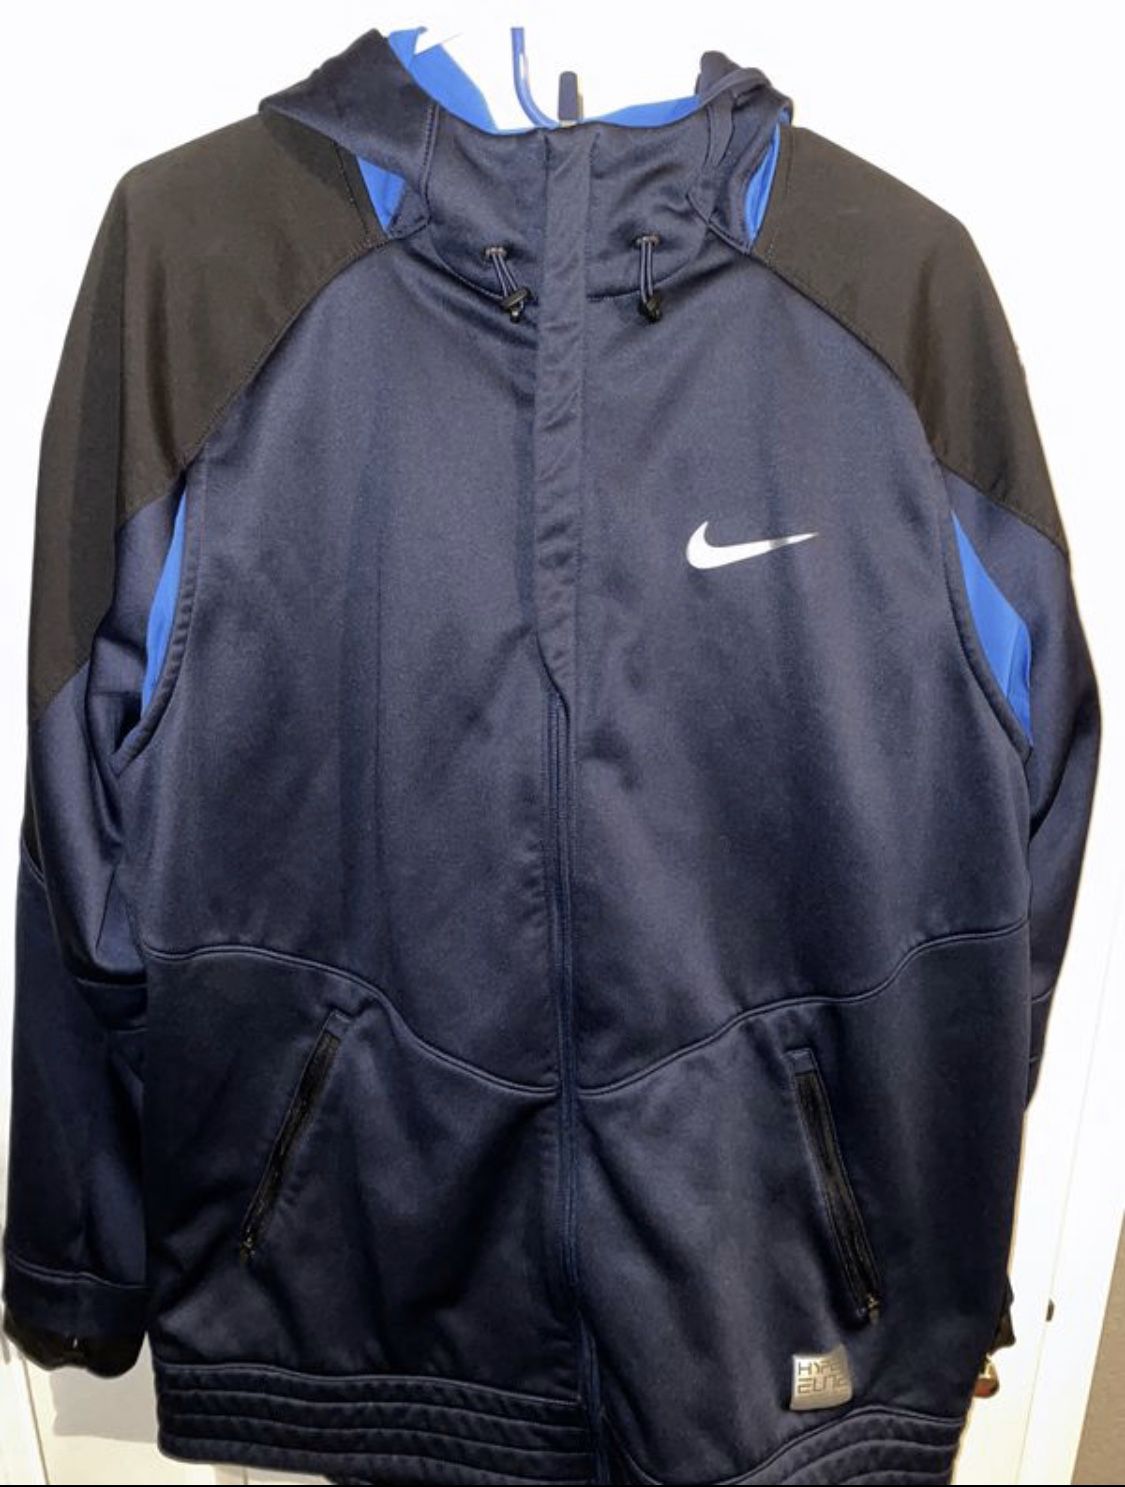 Nike hyper elite suit. Polo shorts Nike tech jacket bundle for JT